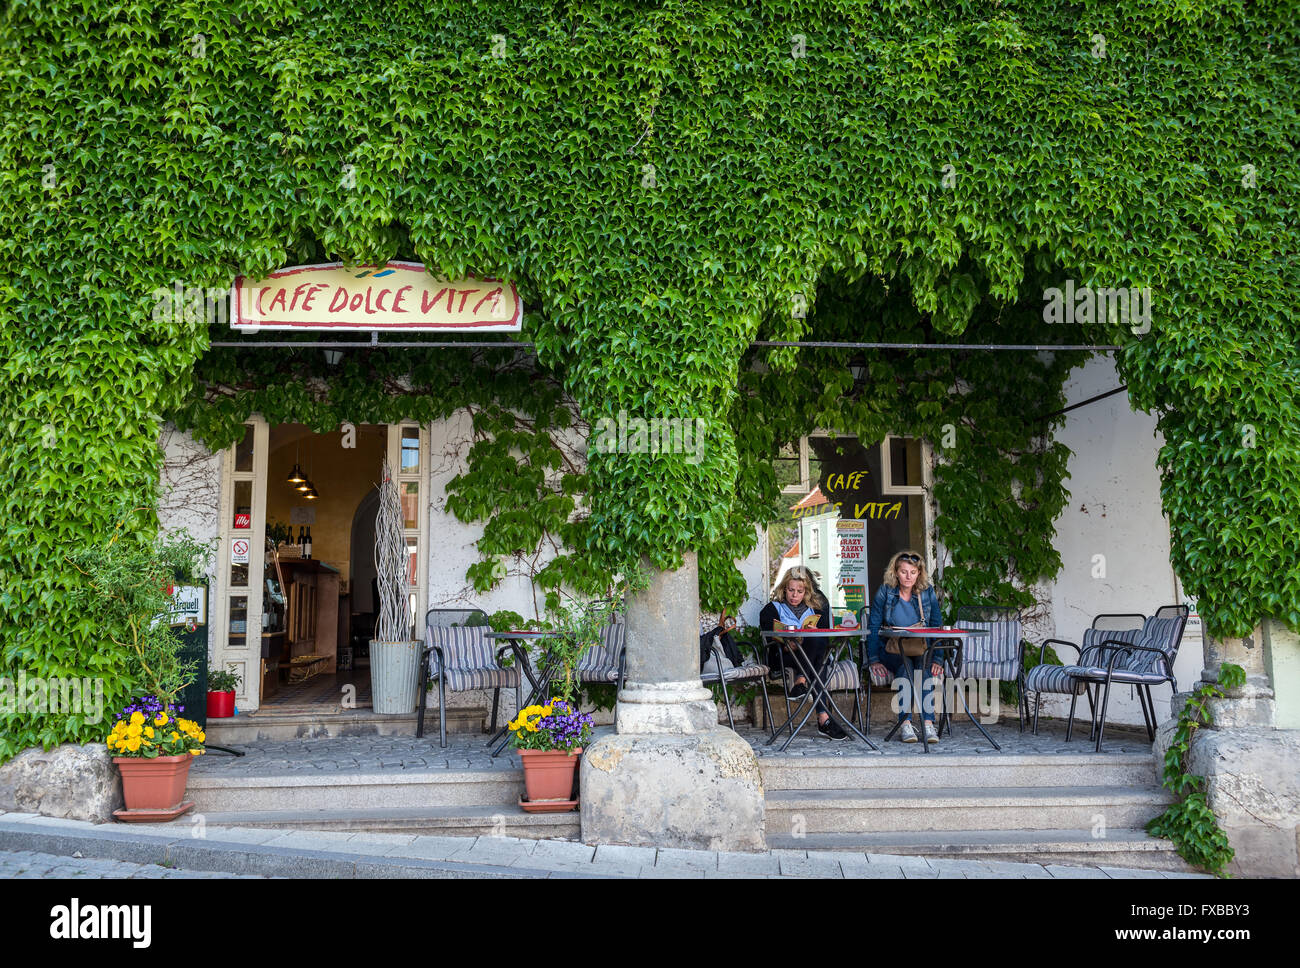 Cafe Dolce Vita at historic central square in Mikulov town, Moravia region, Czech Republic Stock Photo